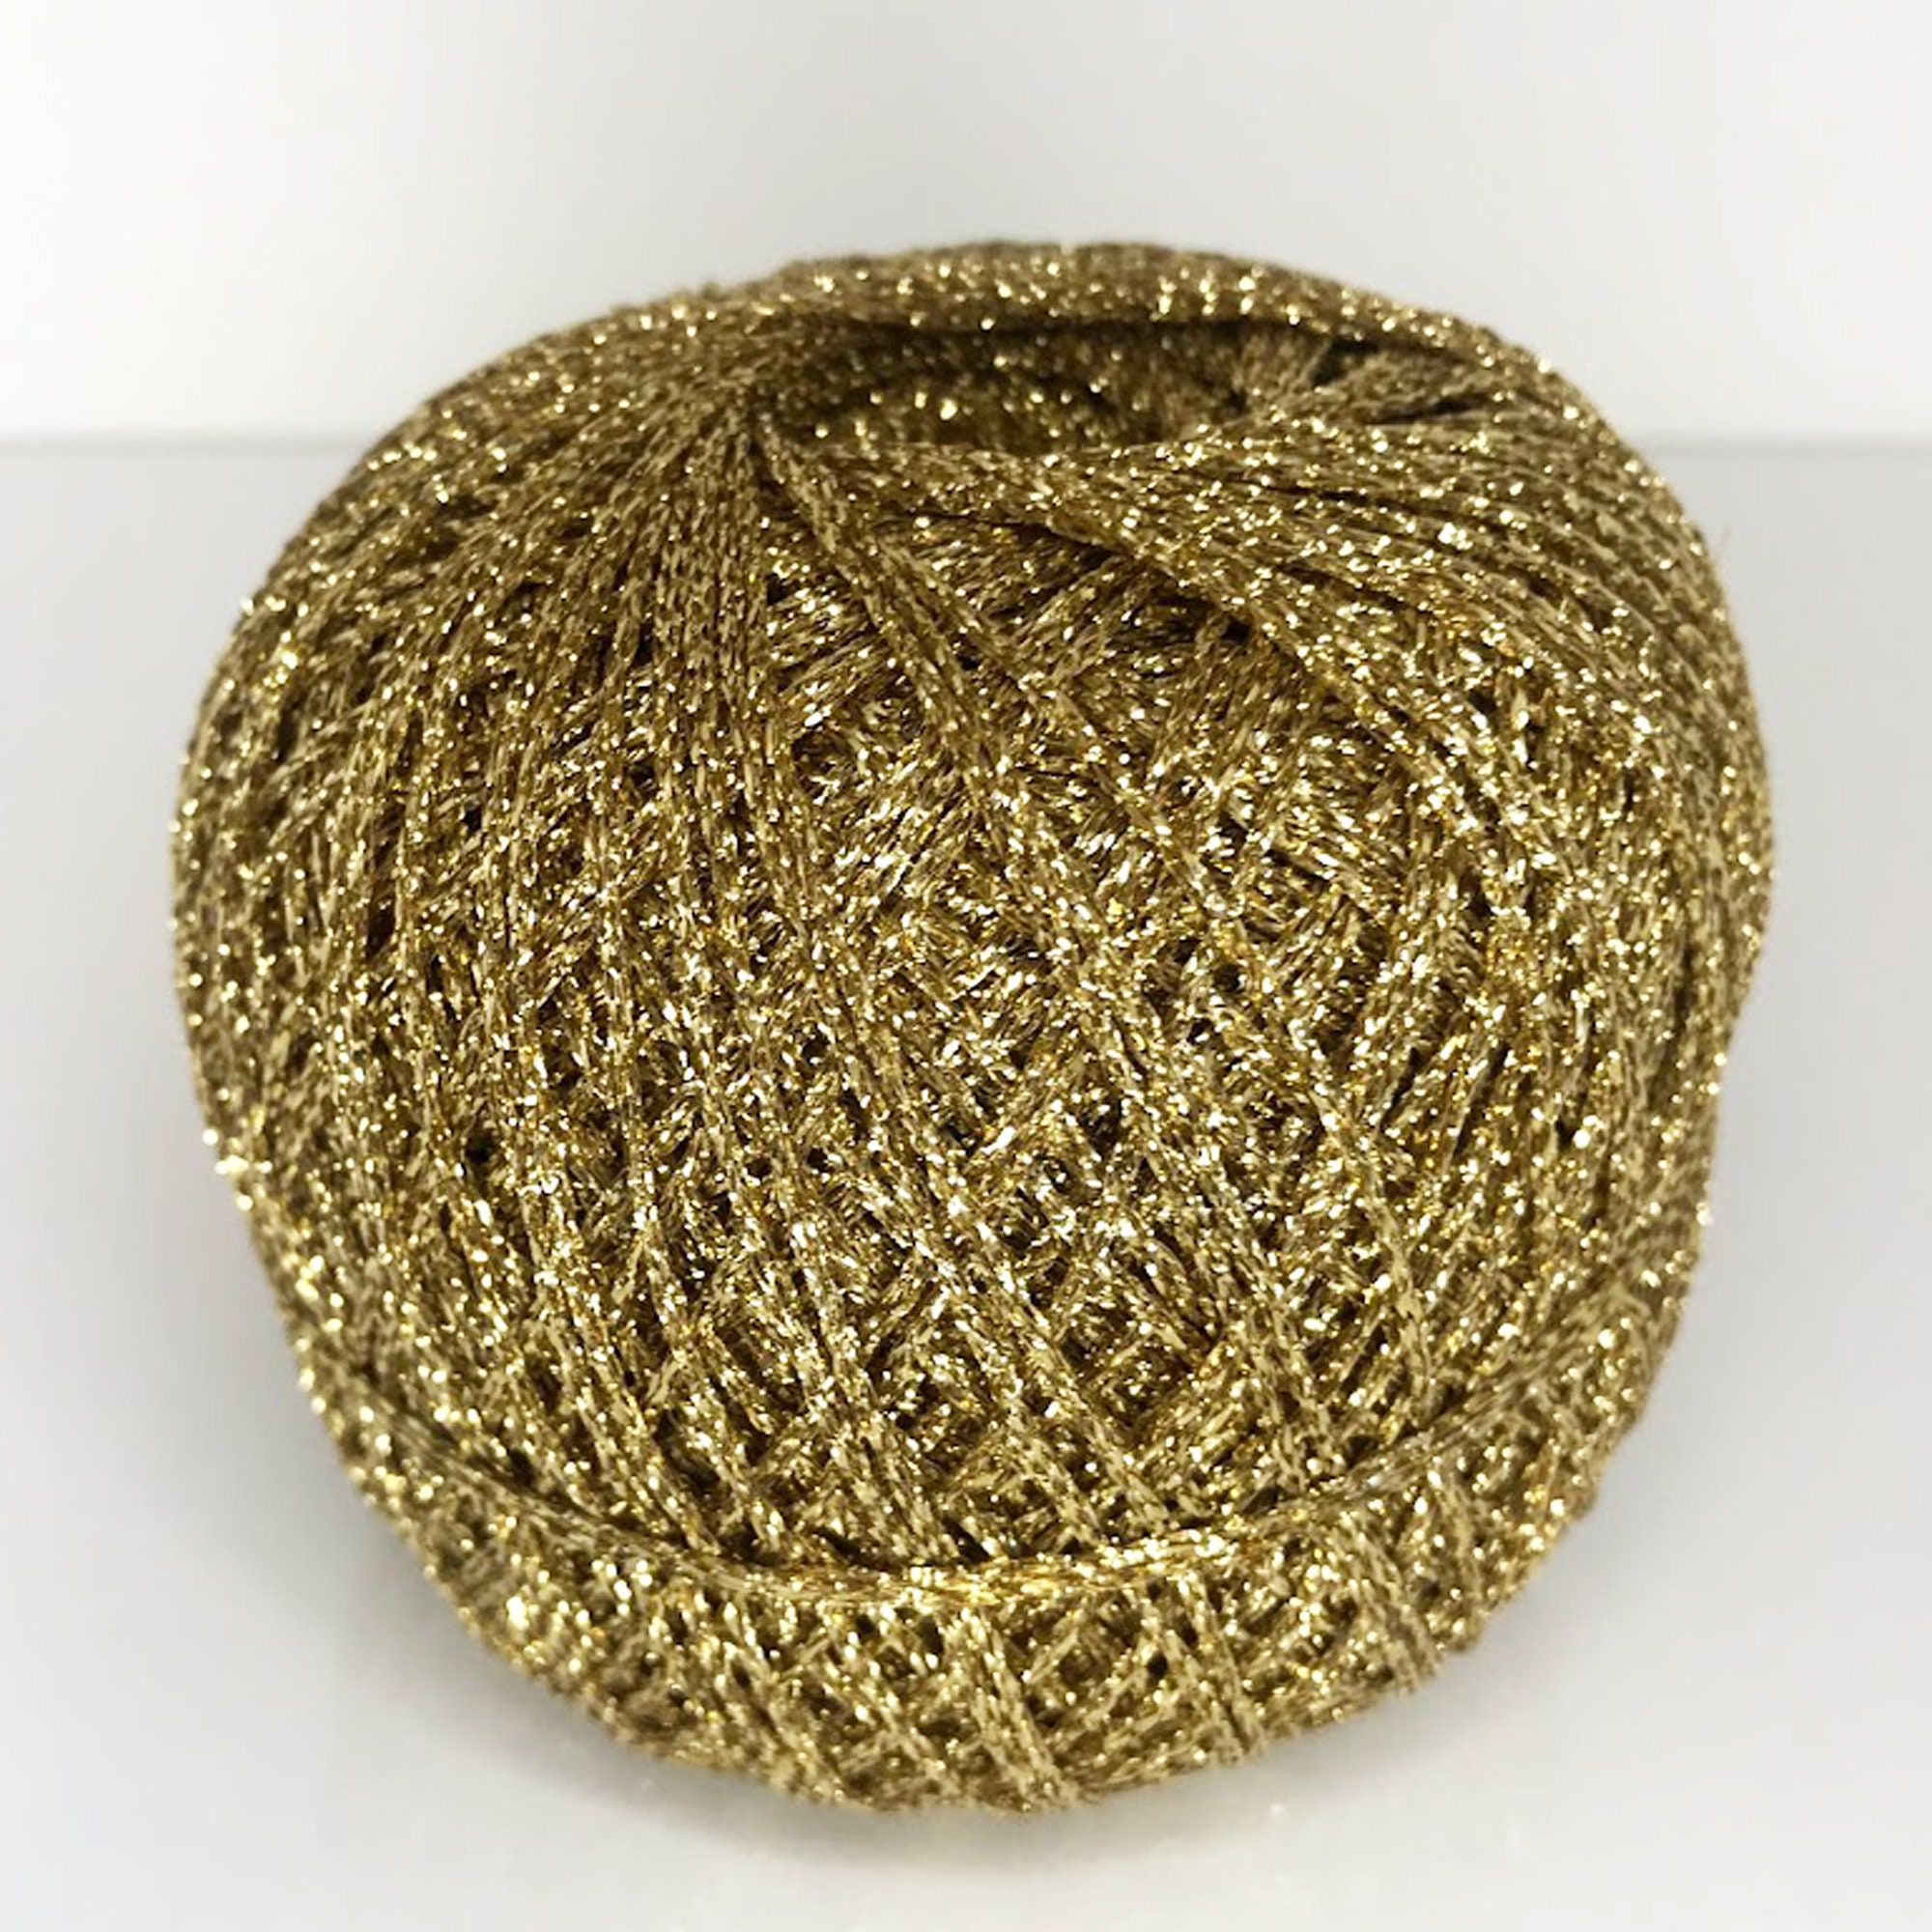 Crochet Metallic Thread, Crochet Lurex Yarns, Glitter Mercerized Cotton  Perle Size 5, Silver Gold Embroidery Thread, Lurex Amigurumi Yarn 